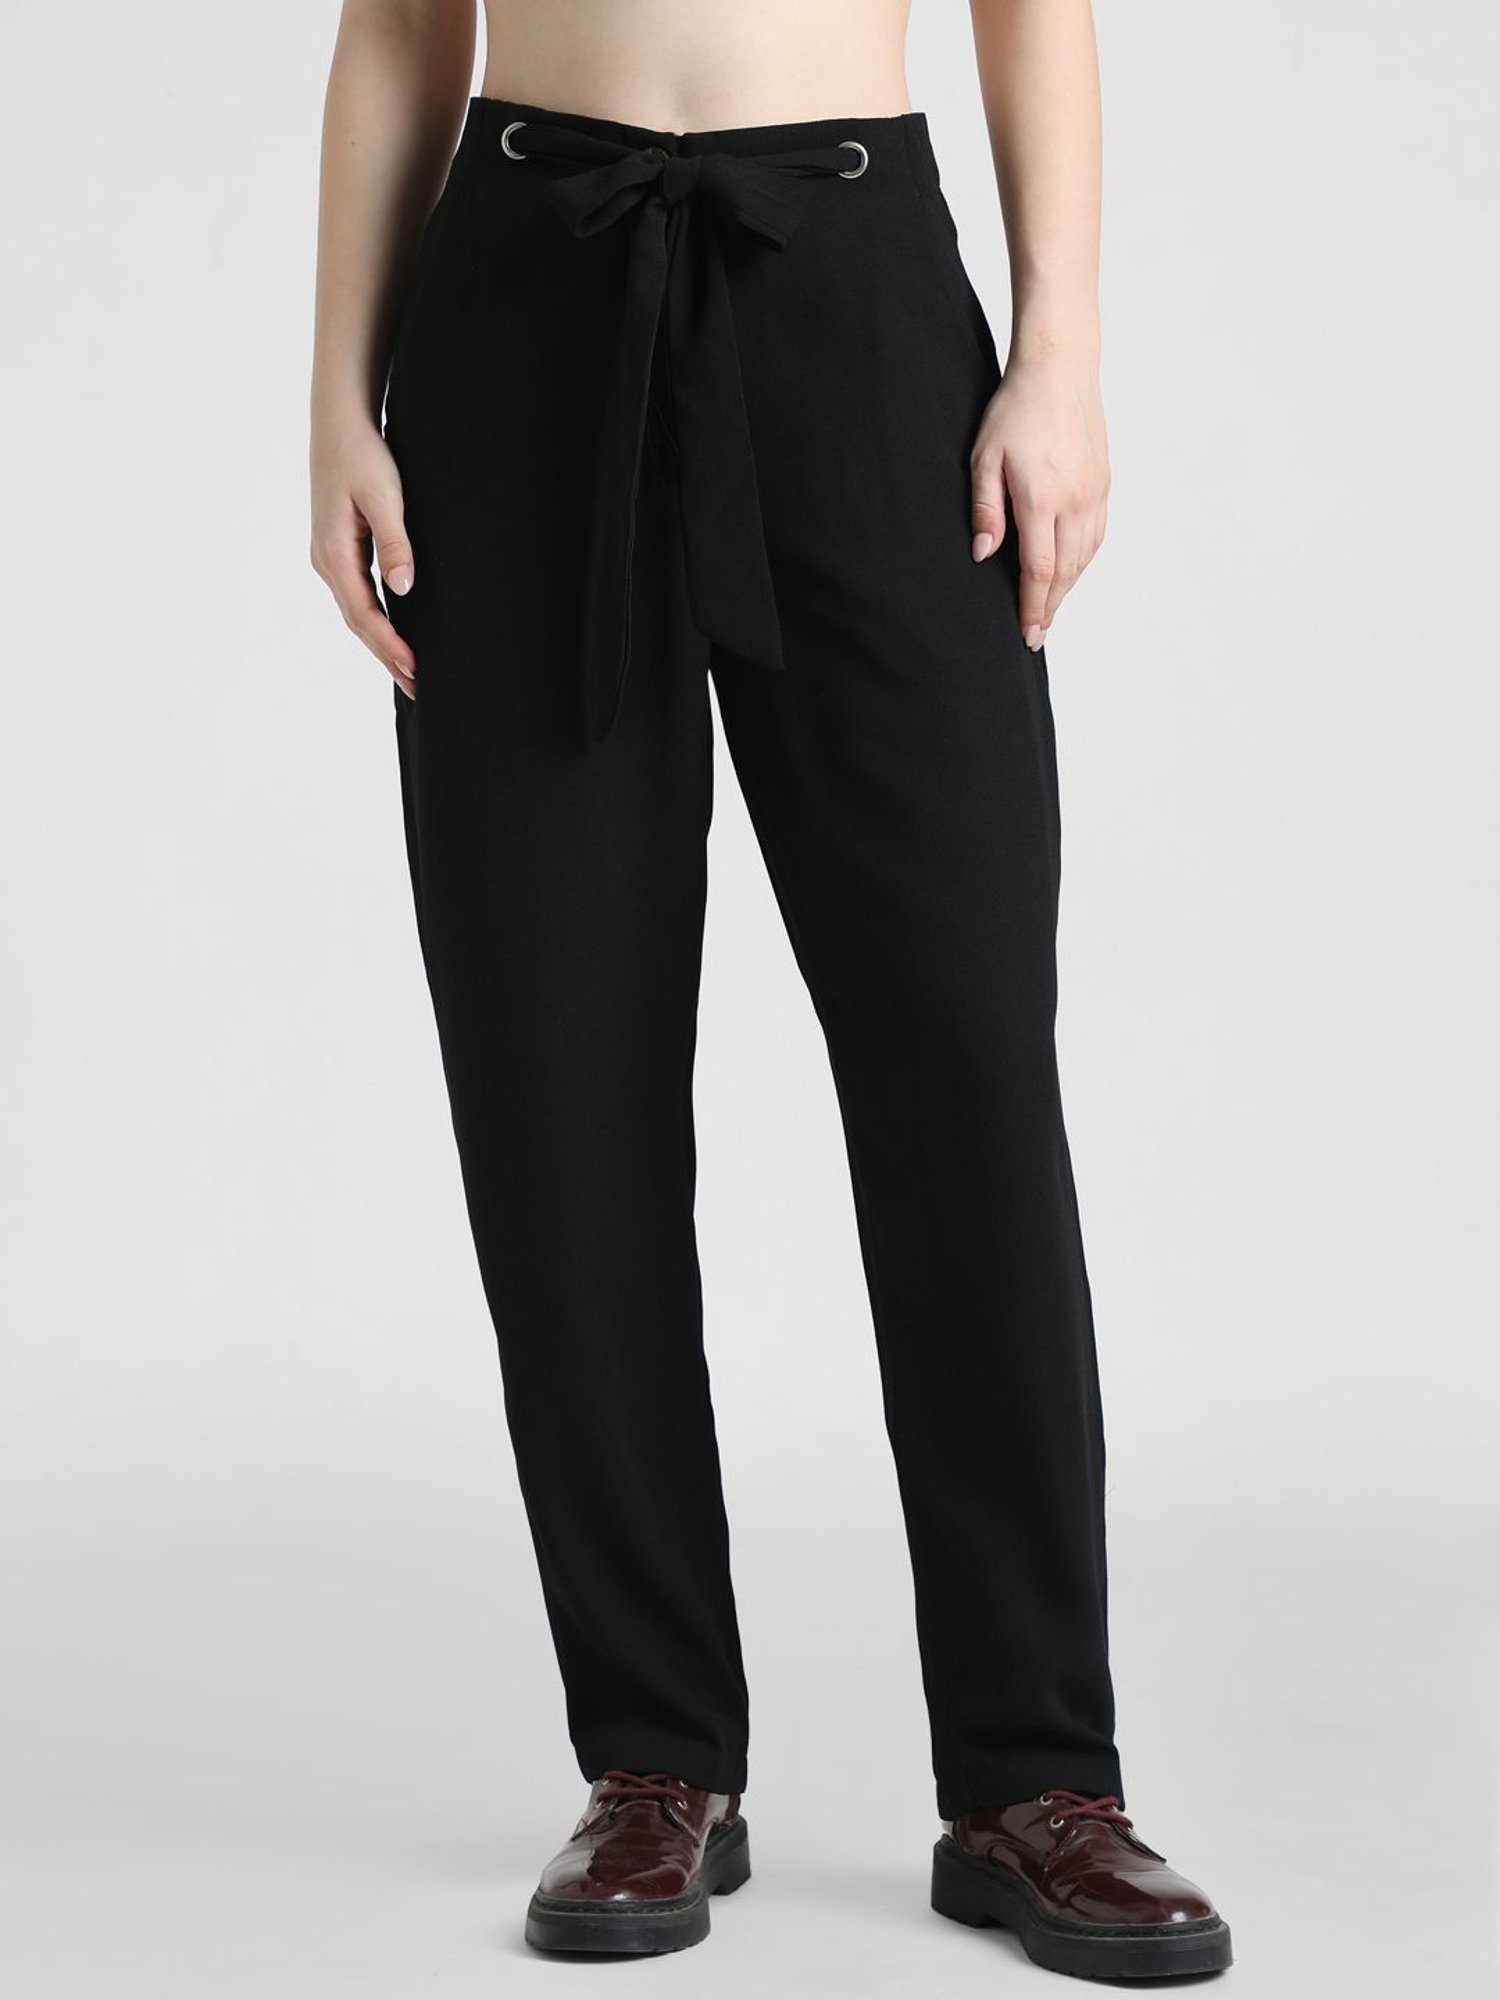 Buy W Black Loose Fit Pants for Women Online @ Tata CLiQ